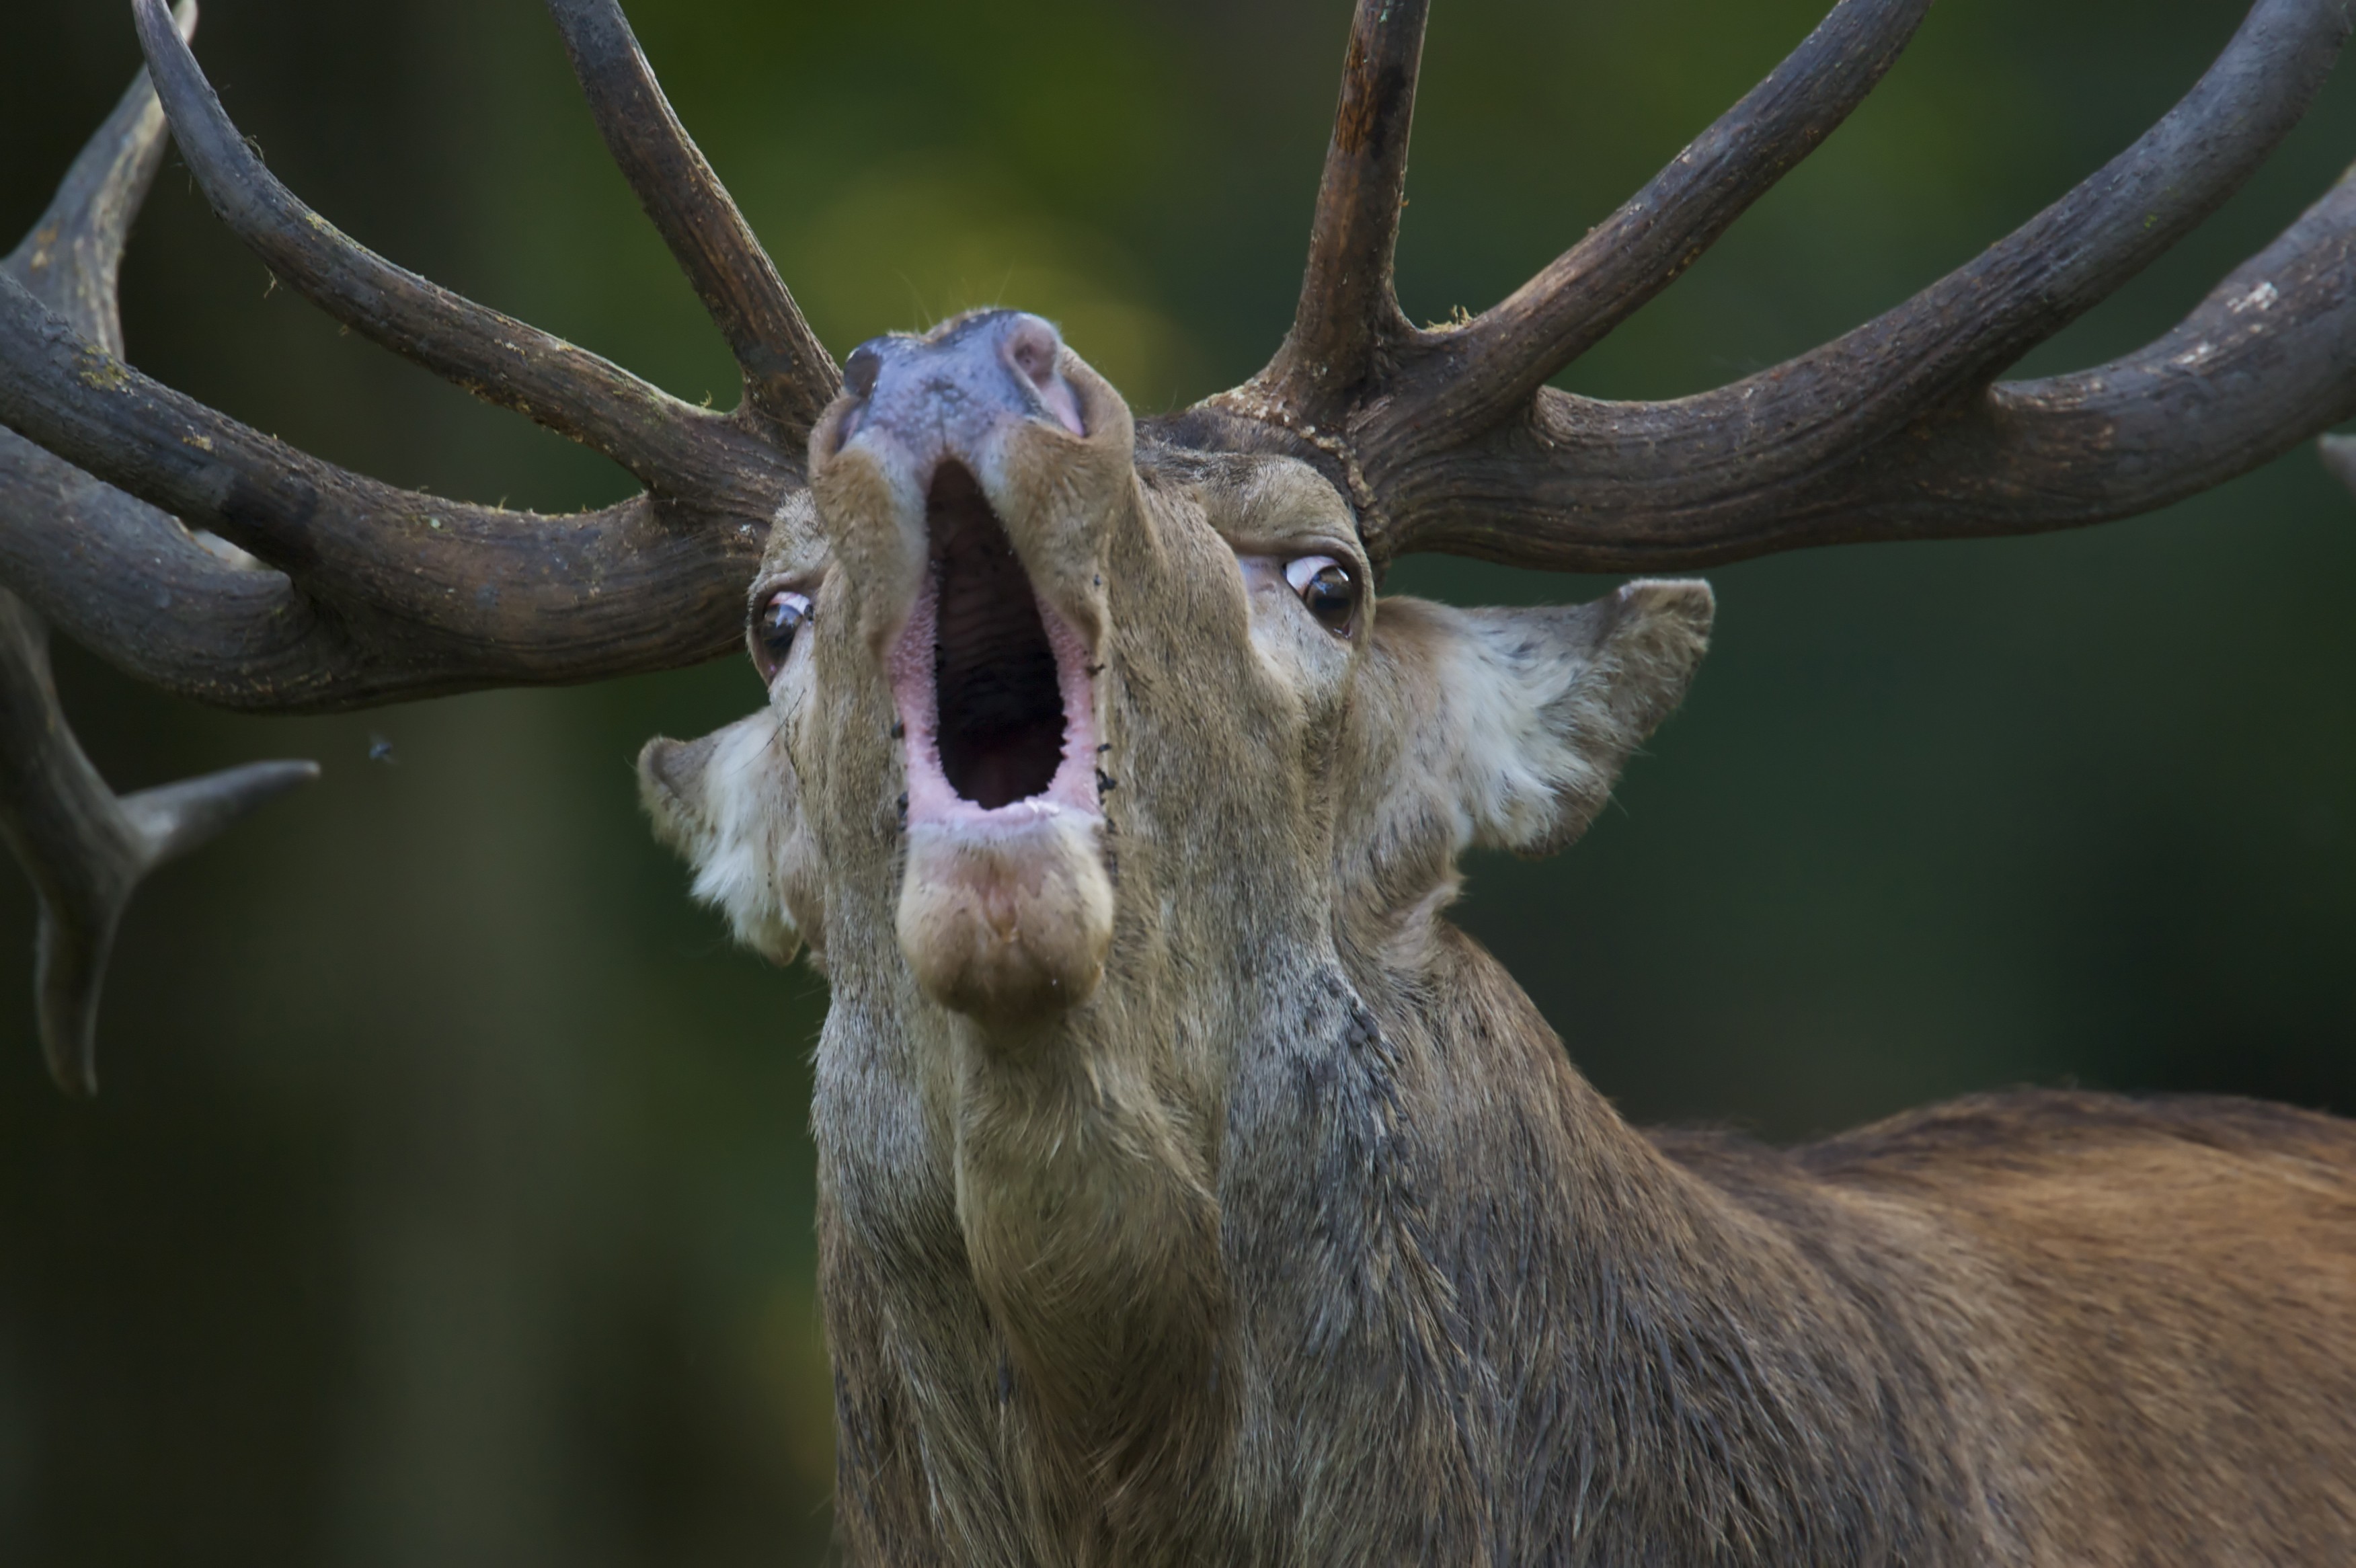 General 3504x2332 animals nature deer open mouth antlers depth of field fur muzzles roar mammals